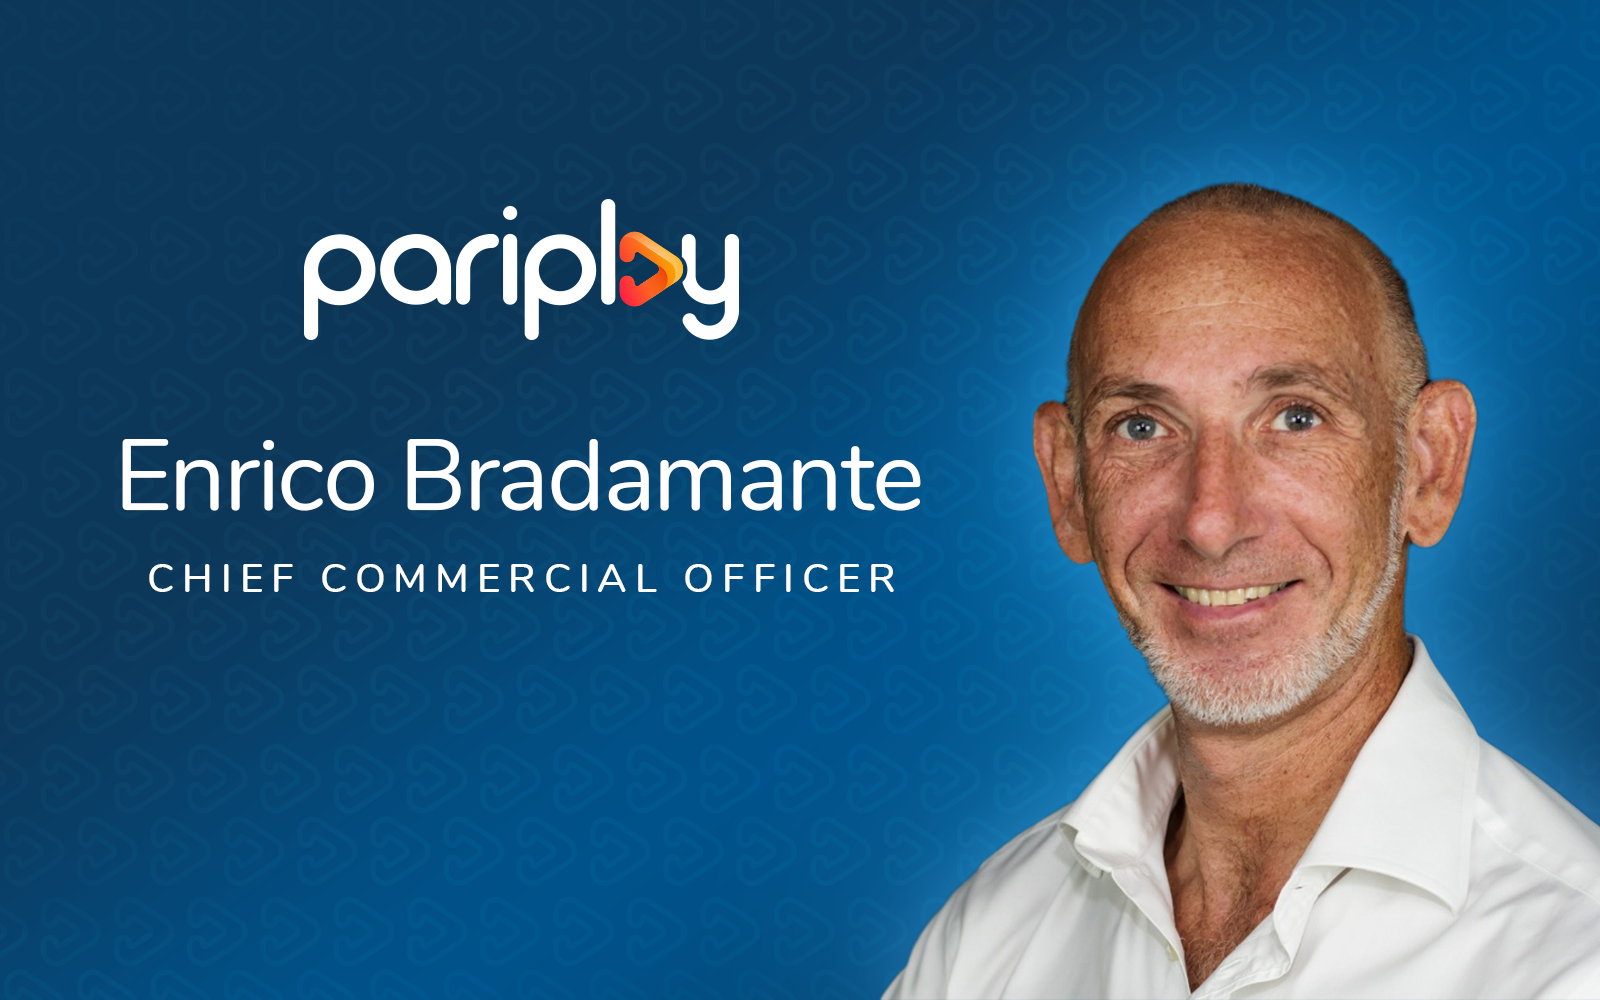 Enrico Bradamante joins Pariplay